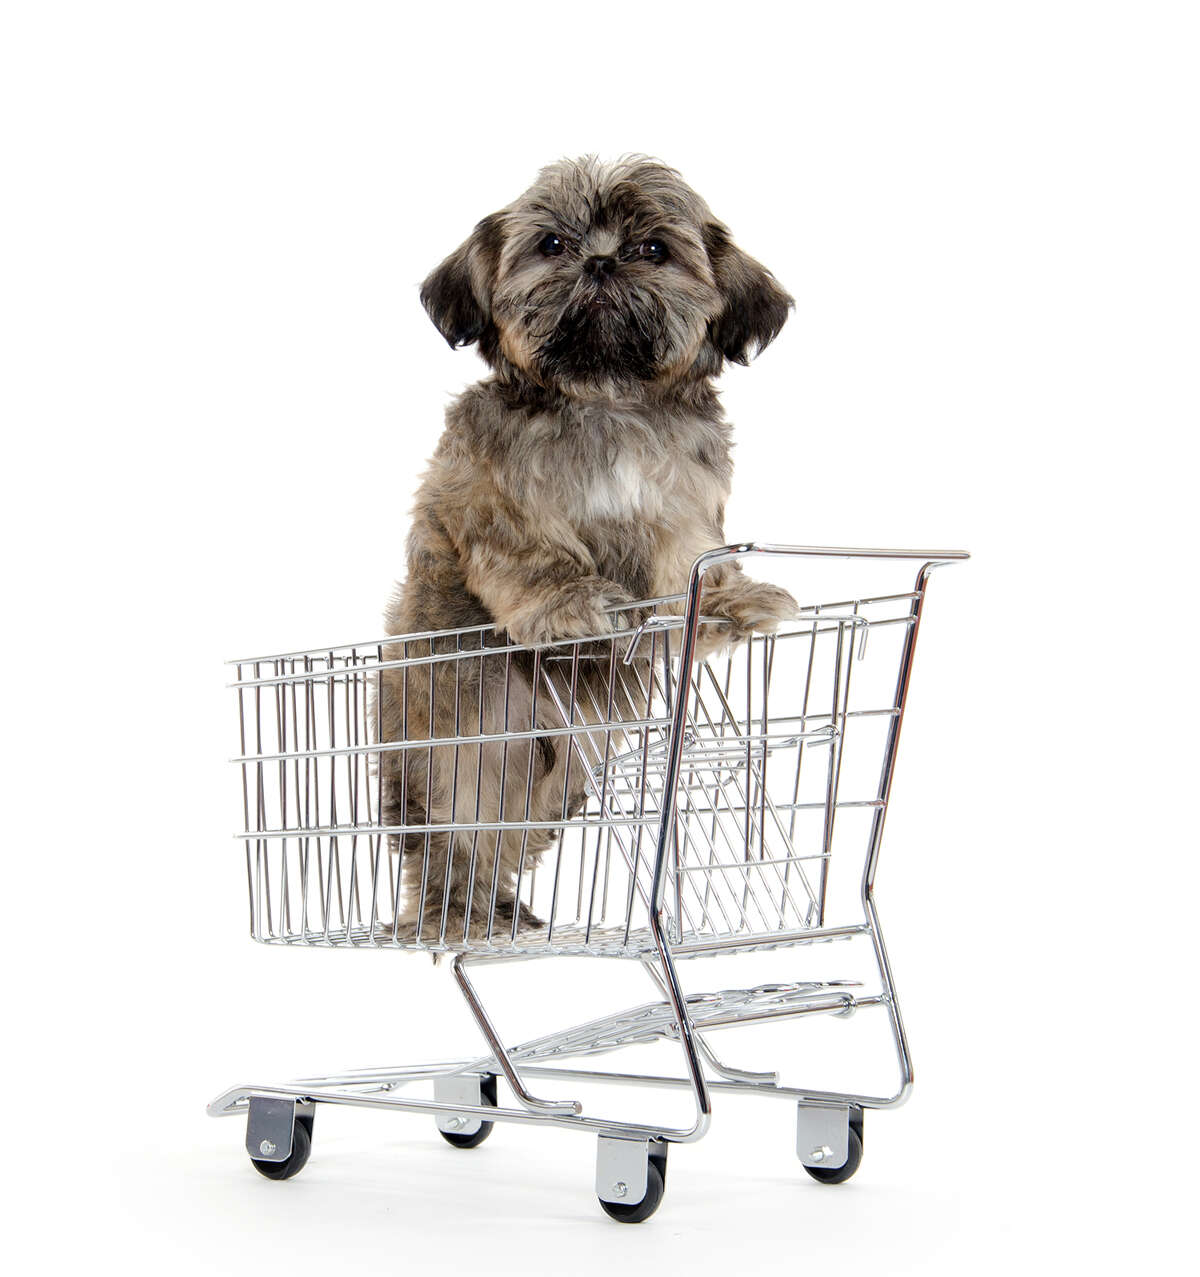 A stock photo of a Shih Tzu dog in a shopping cart.